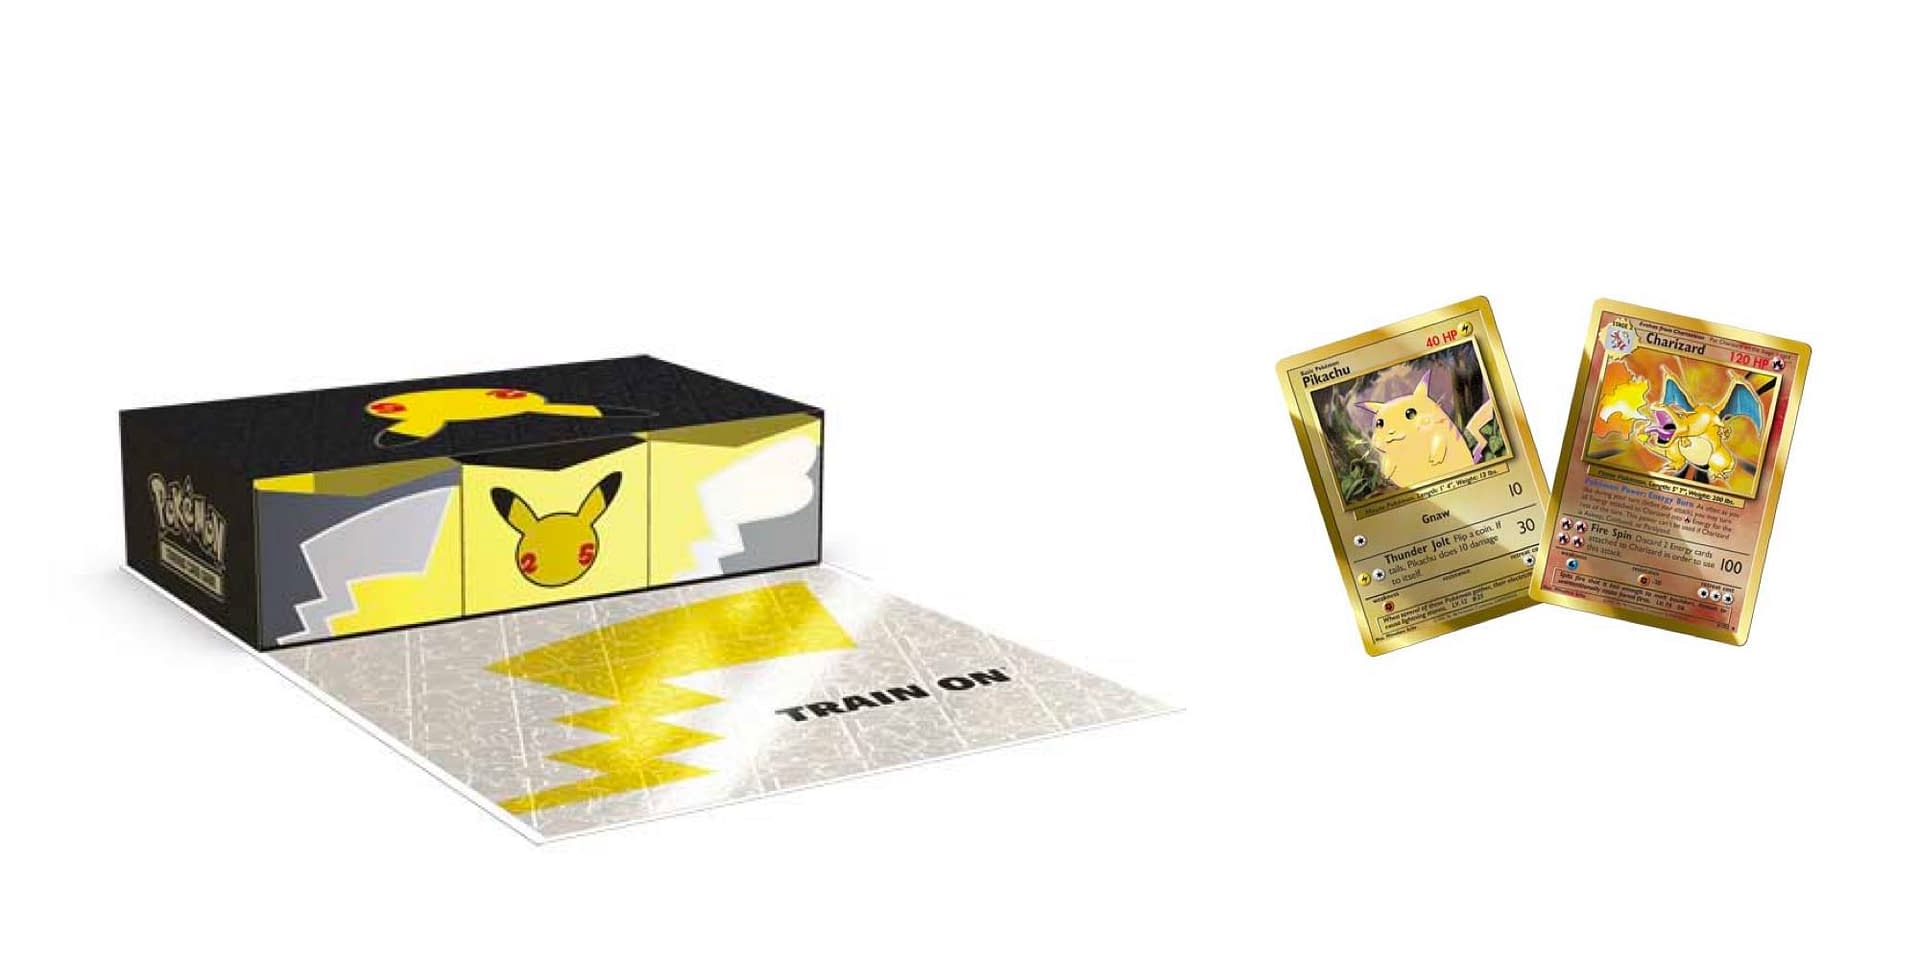 Mew Shiny 25th Anniversary Gold Metal Pokemon Card 